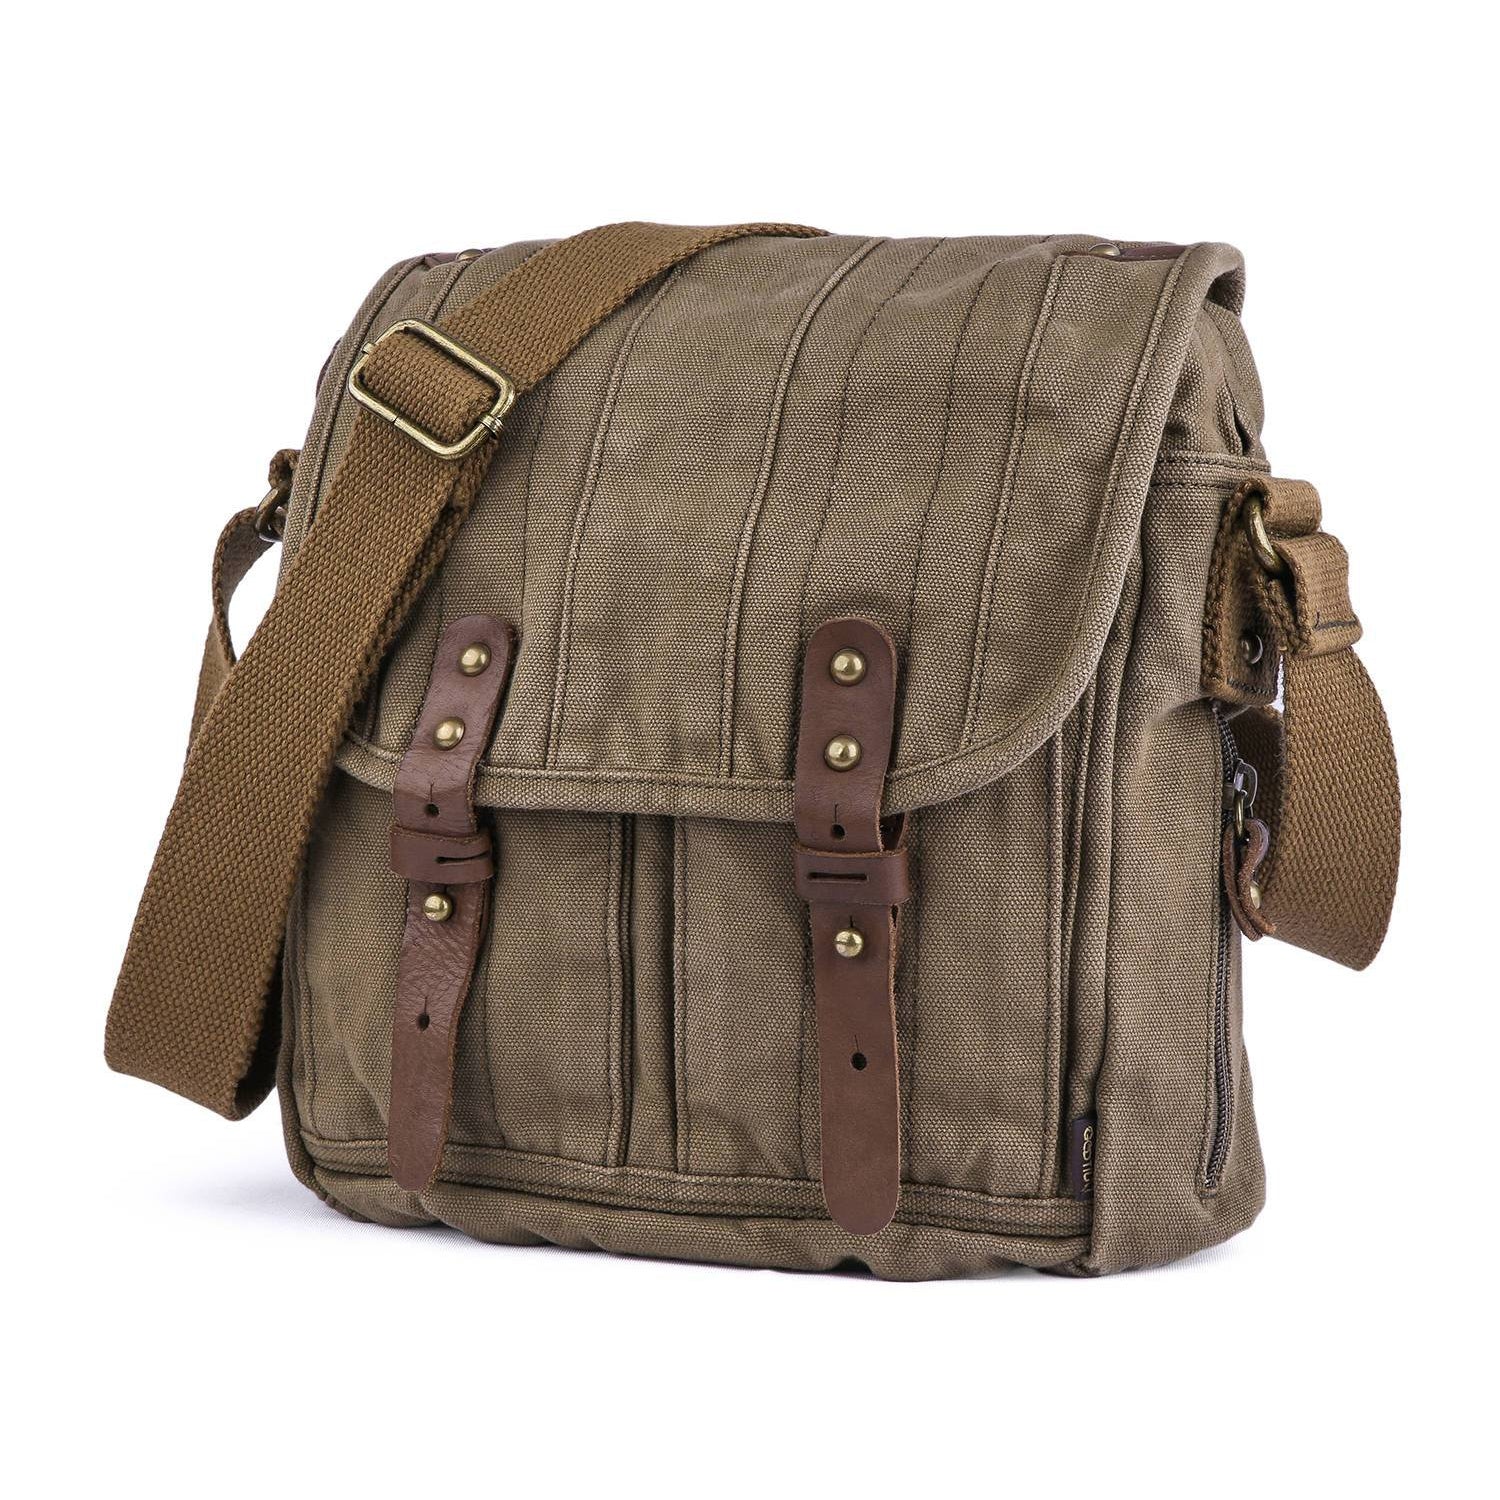  Gootium Canvas Messenger Bag - Vintage Crossbody Shoulder Bag  Military Satchel, Camo